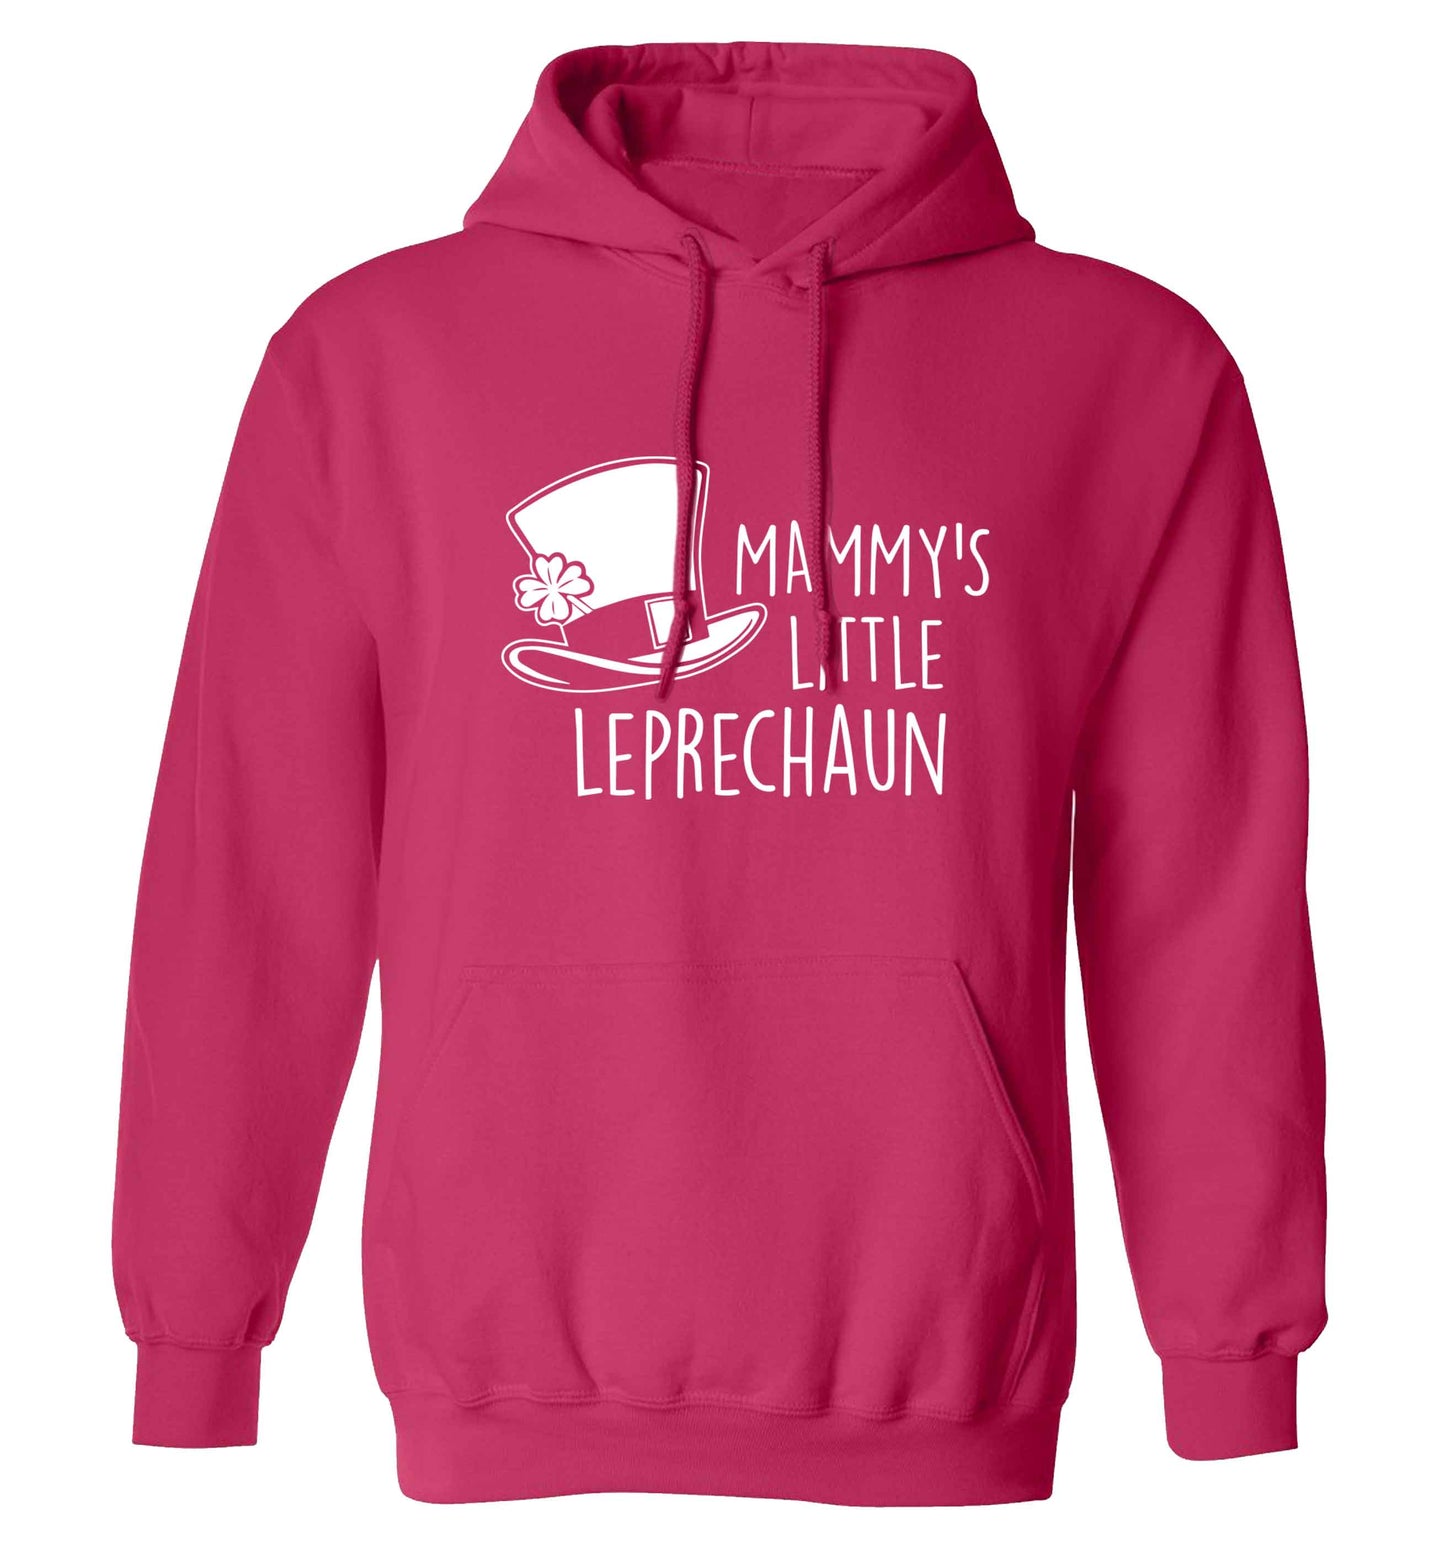 Mammy's little leprechaun adults unisex pink hoodie 2XL